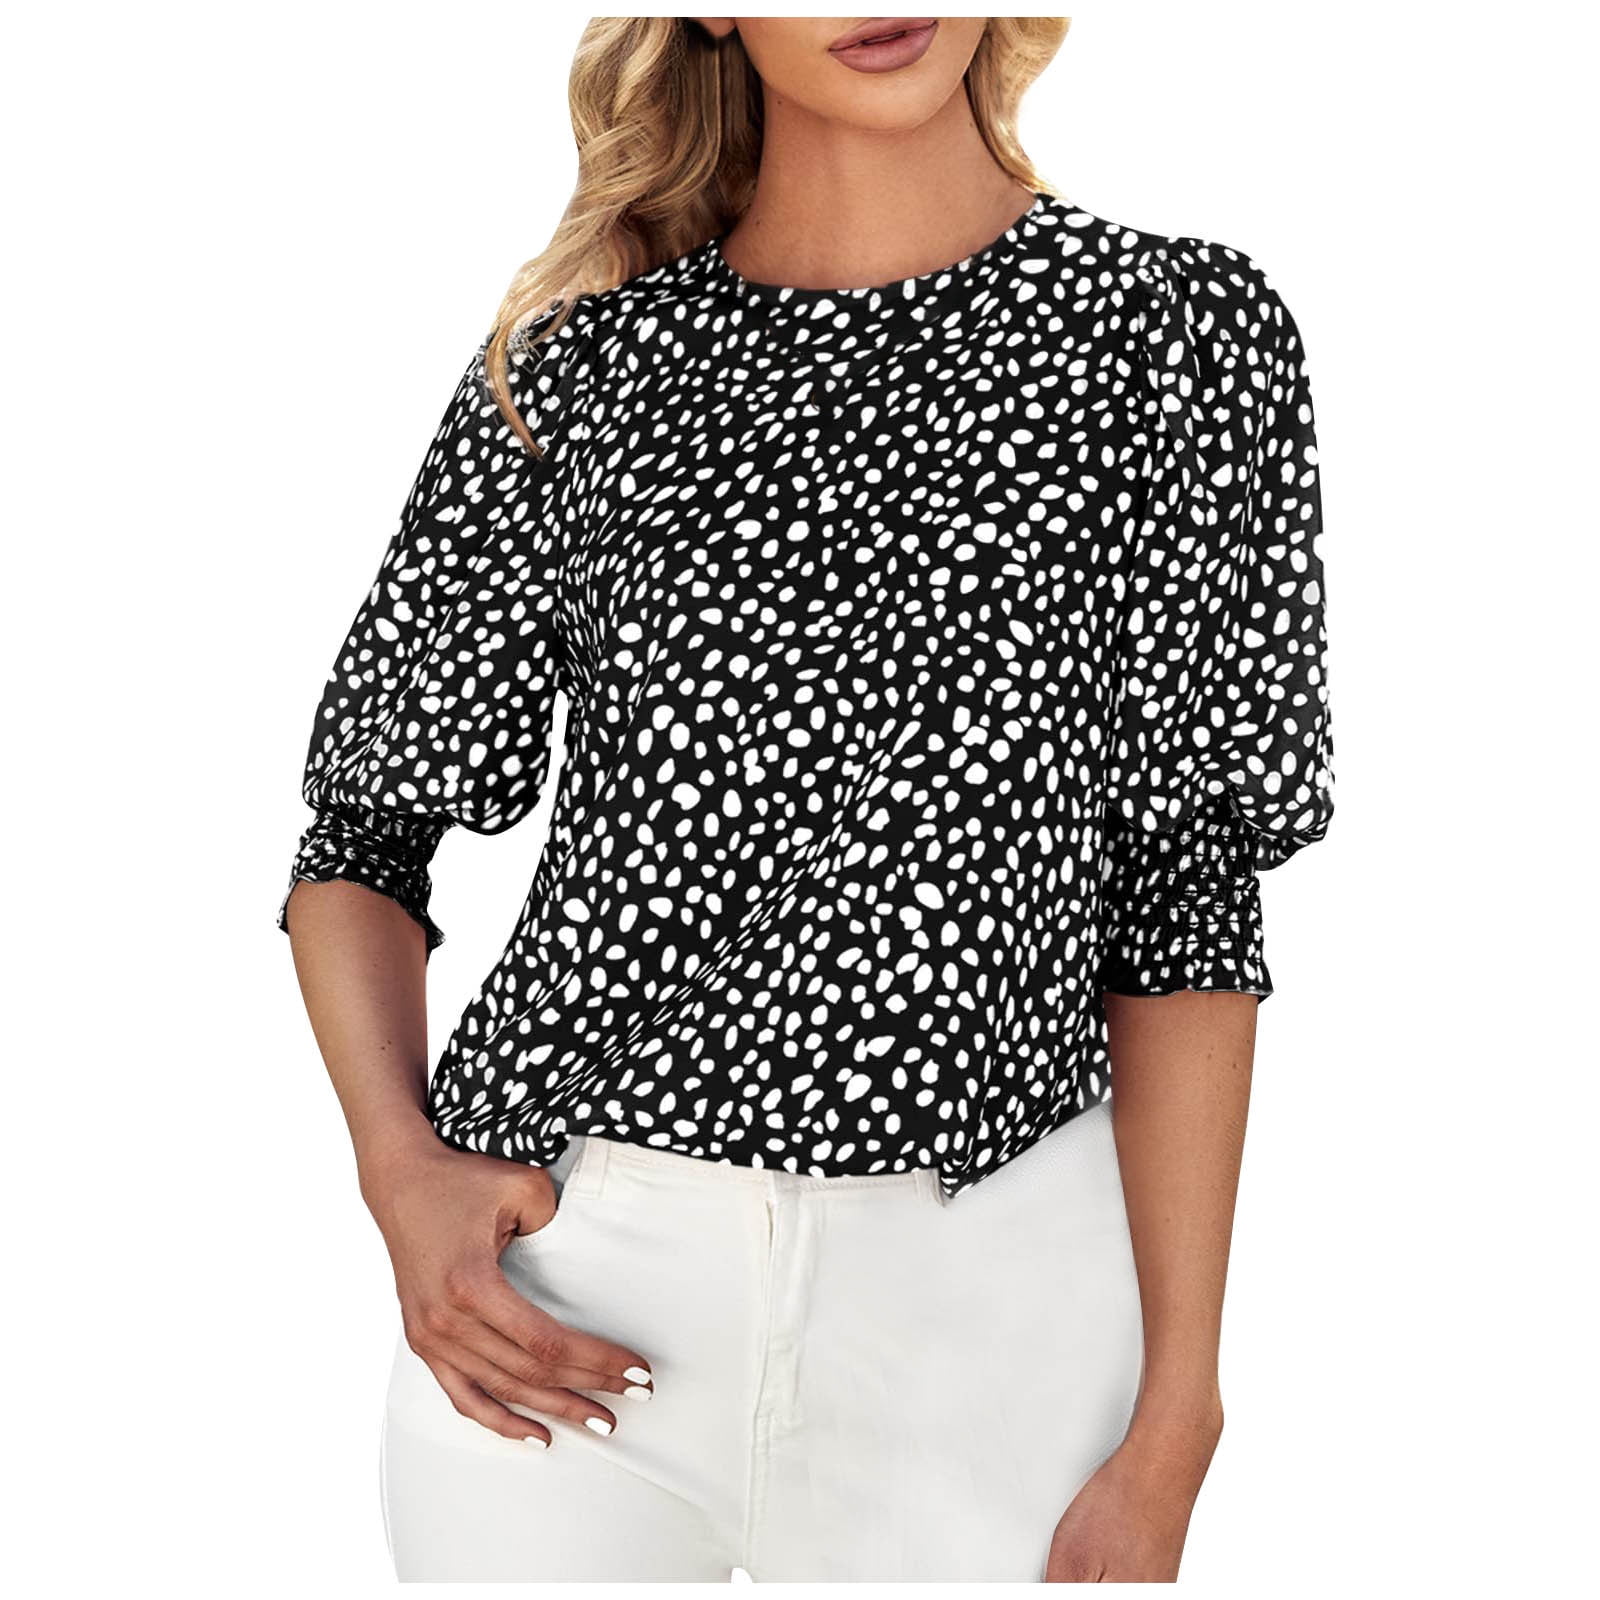 Women's Polka Dot Shirts & Tops, Clothing